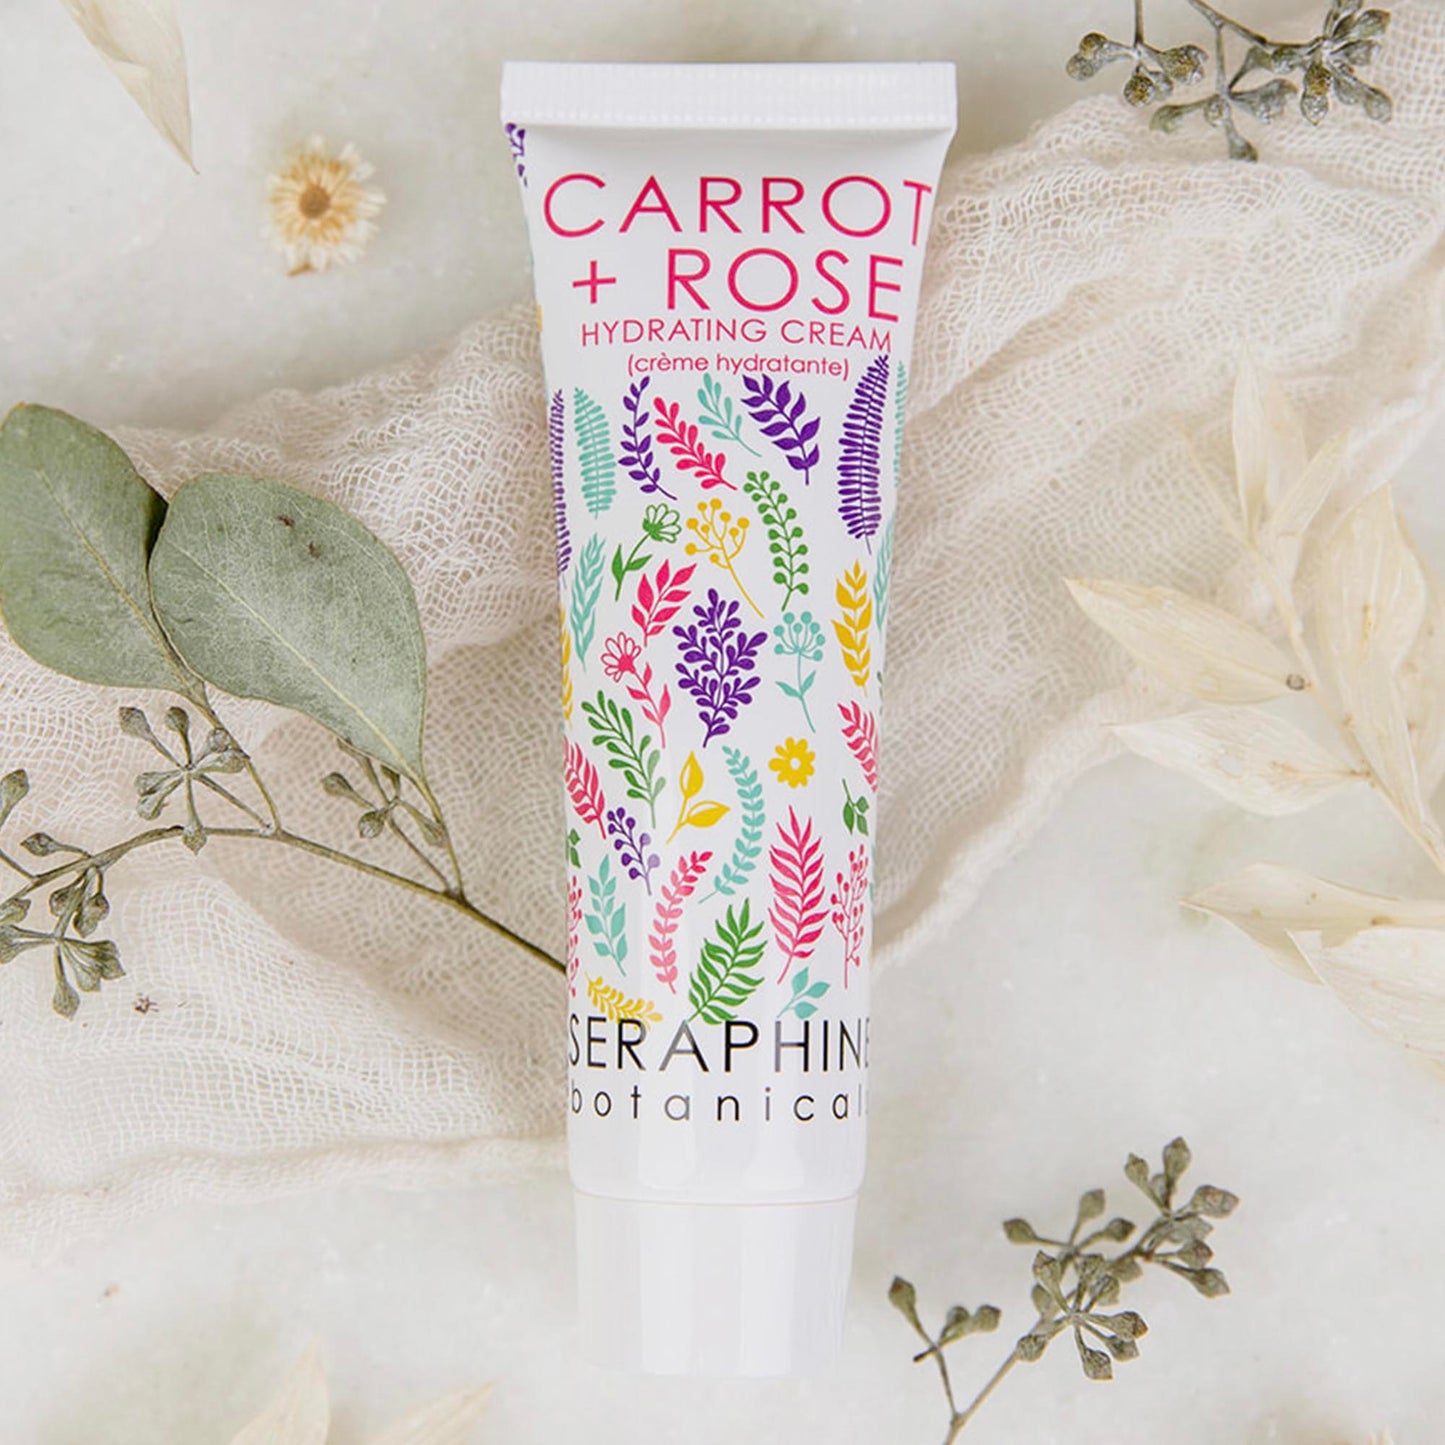 Carrot + Rose - Hydrating Cream